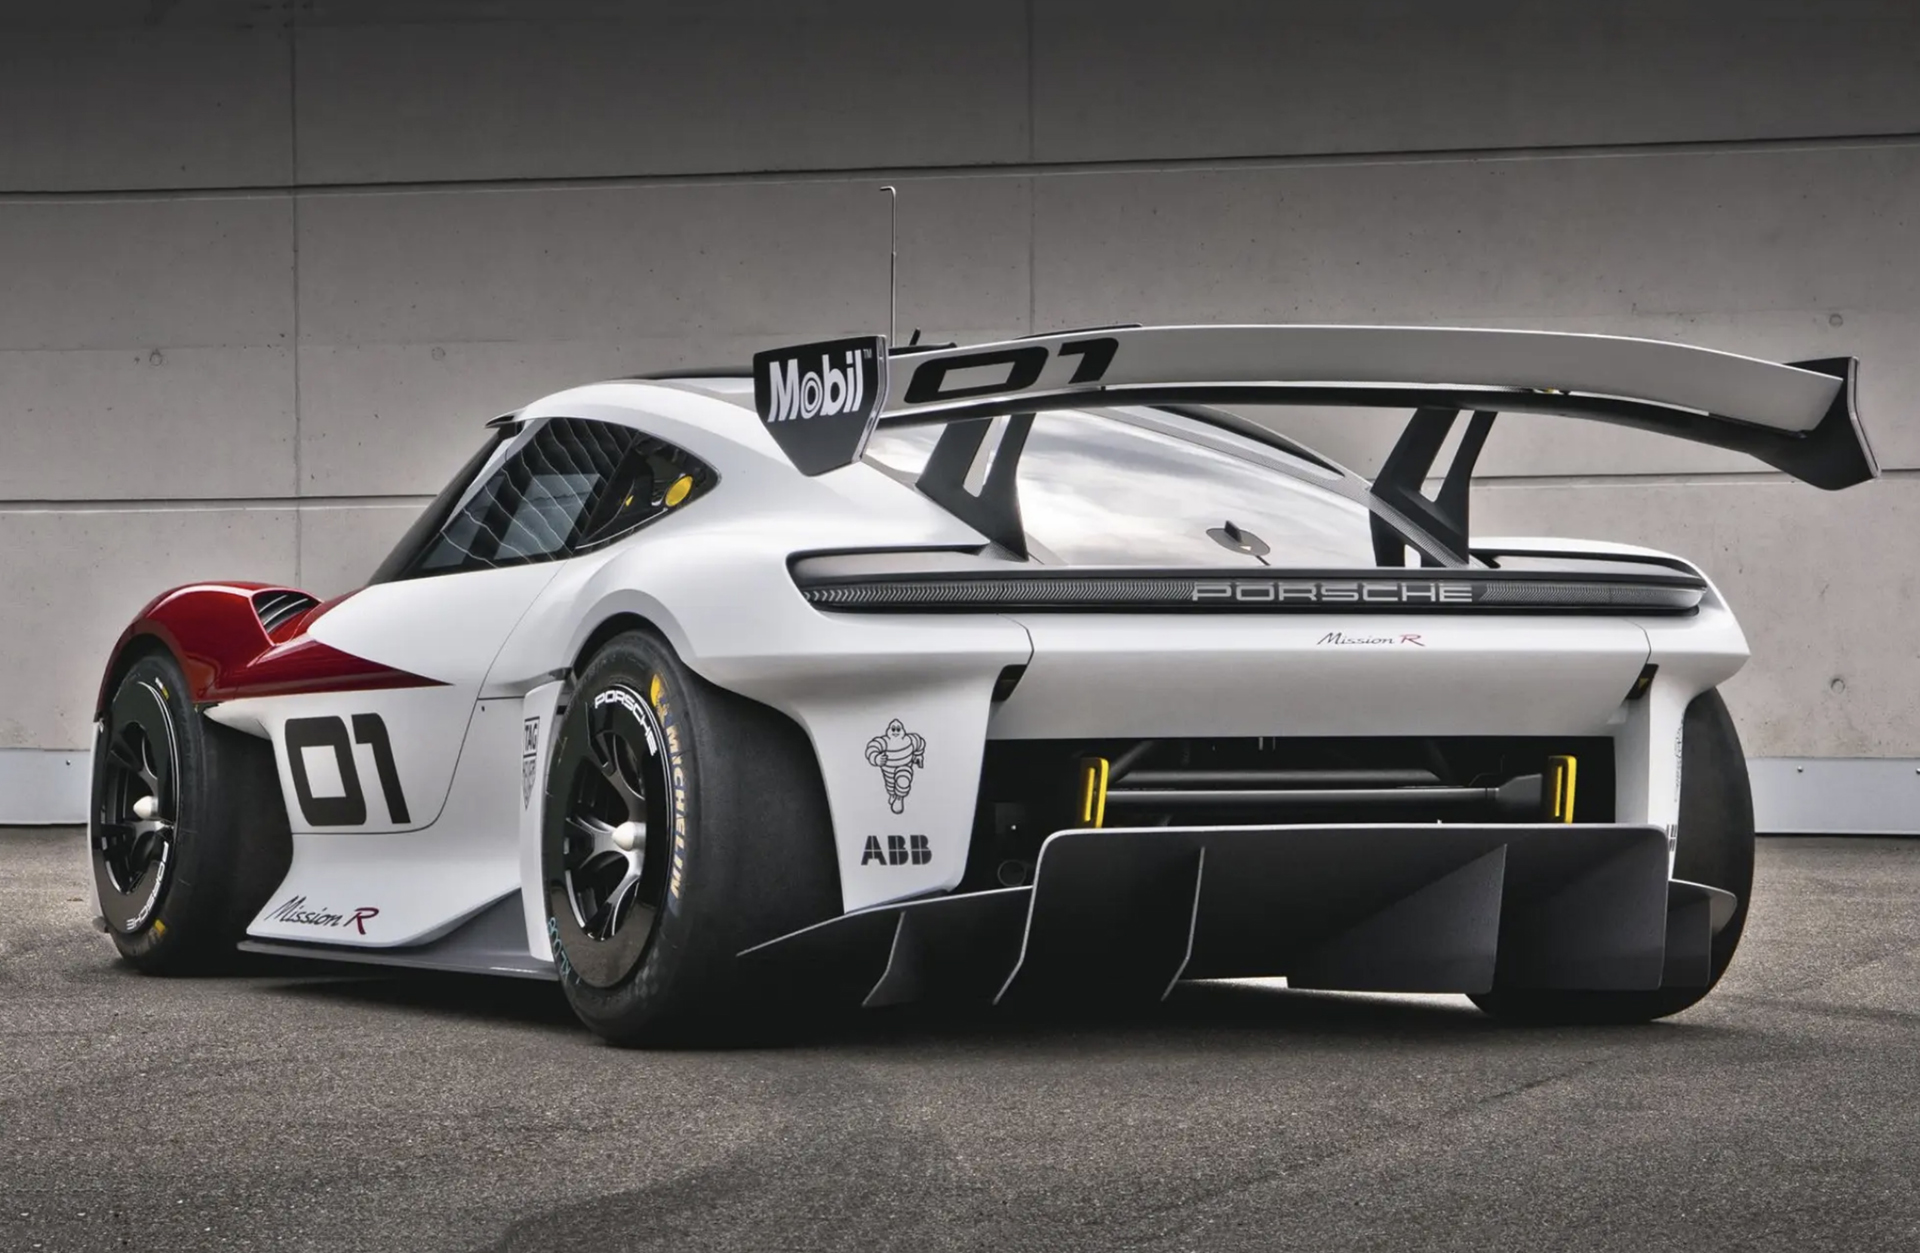 FOTO 6 - Porsche nos muestra un modelo eléctrico dedicado a competir en pista